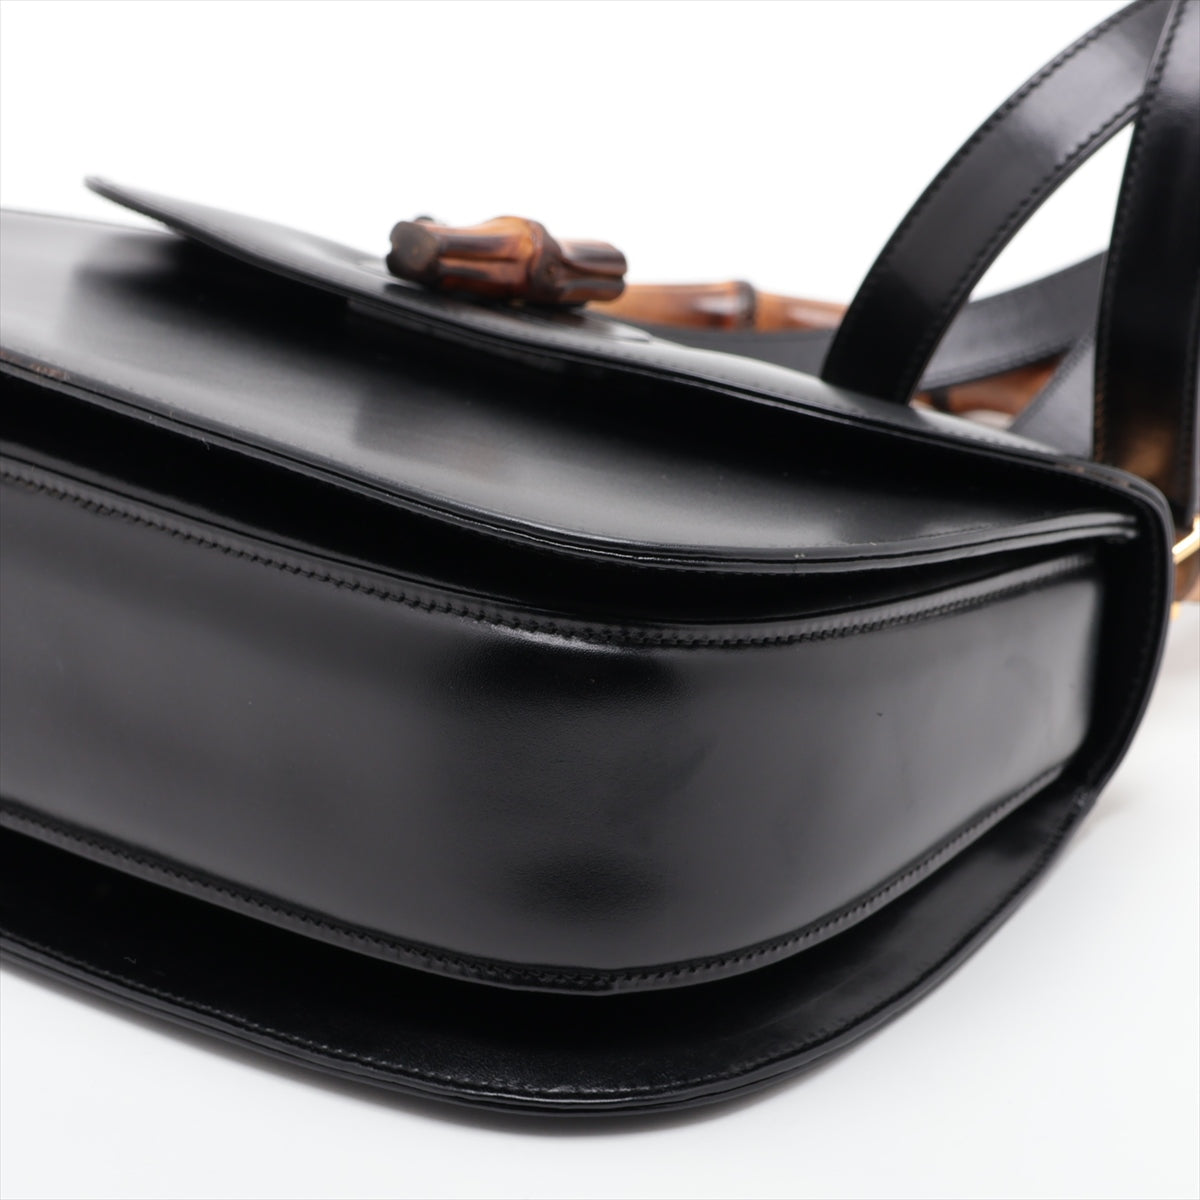 Gucci Bamboo Leather 2way handbag Black